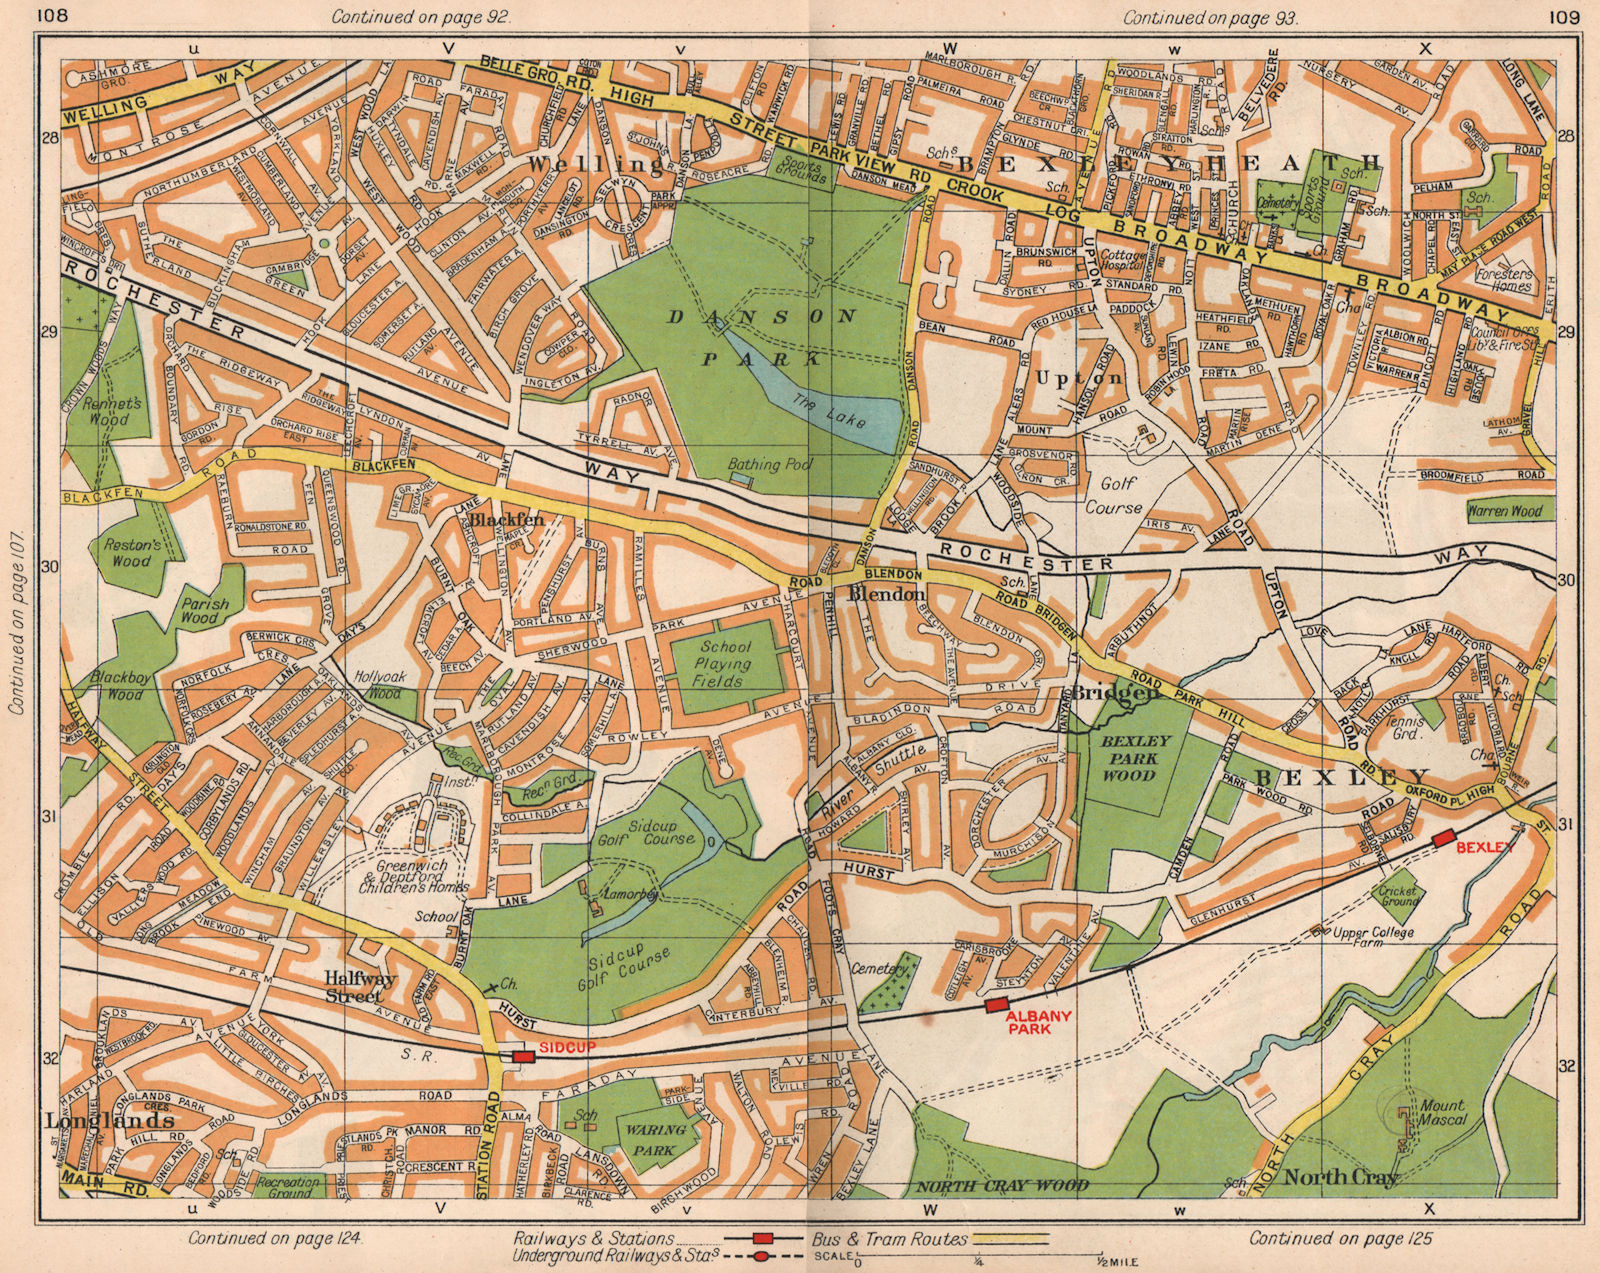 SE LONDON. Blackfen Bexleyheath Blendon Albany Park Bexley North Cray 1938 map